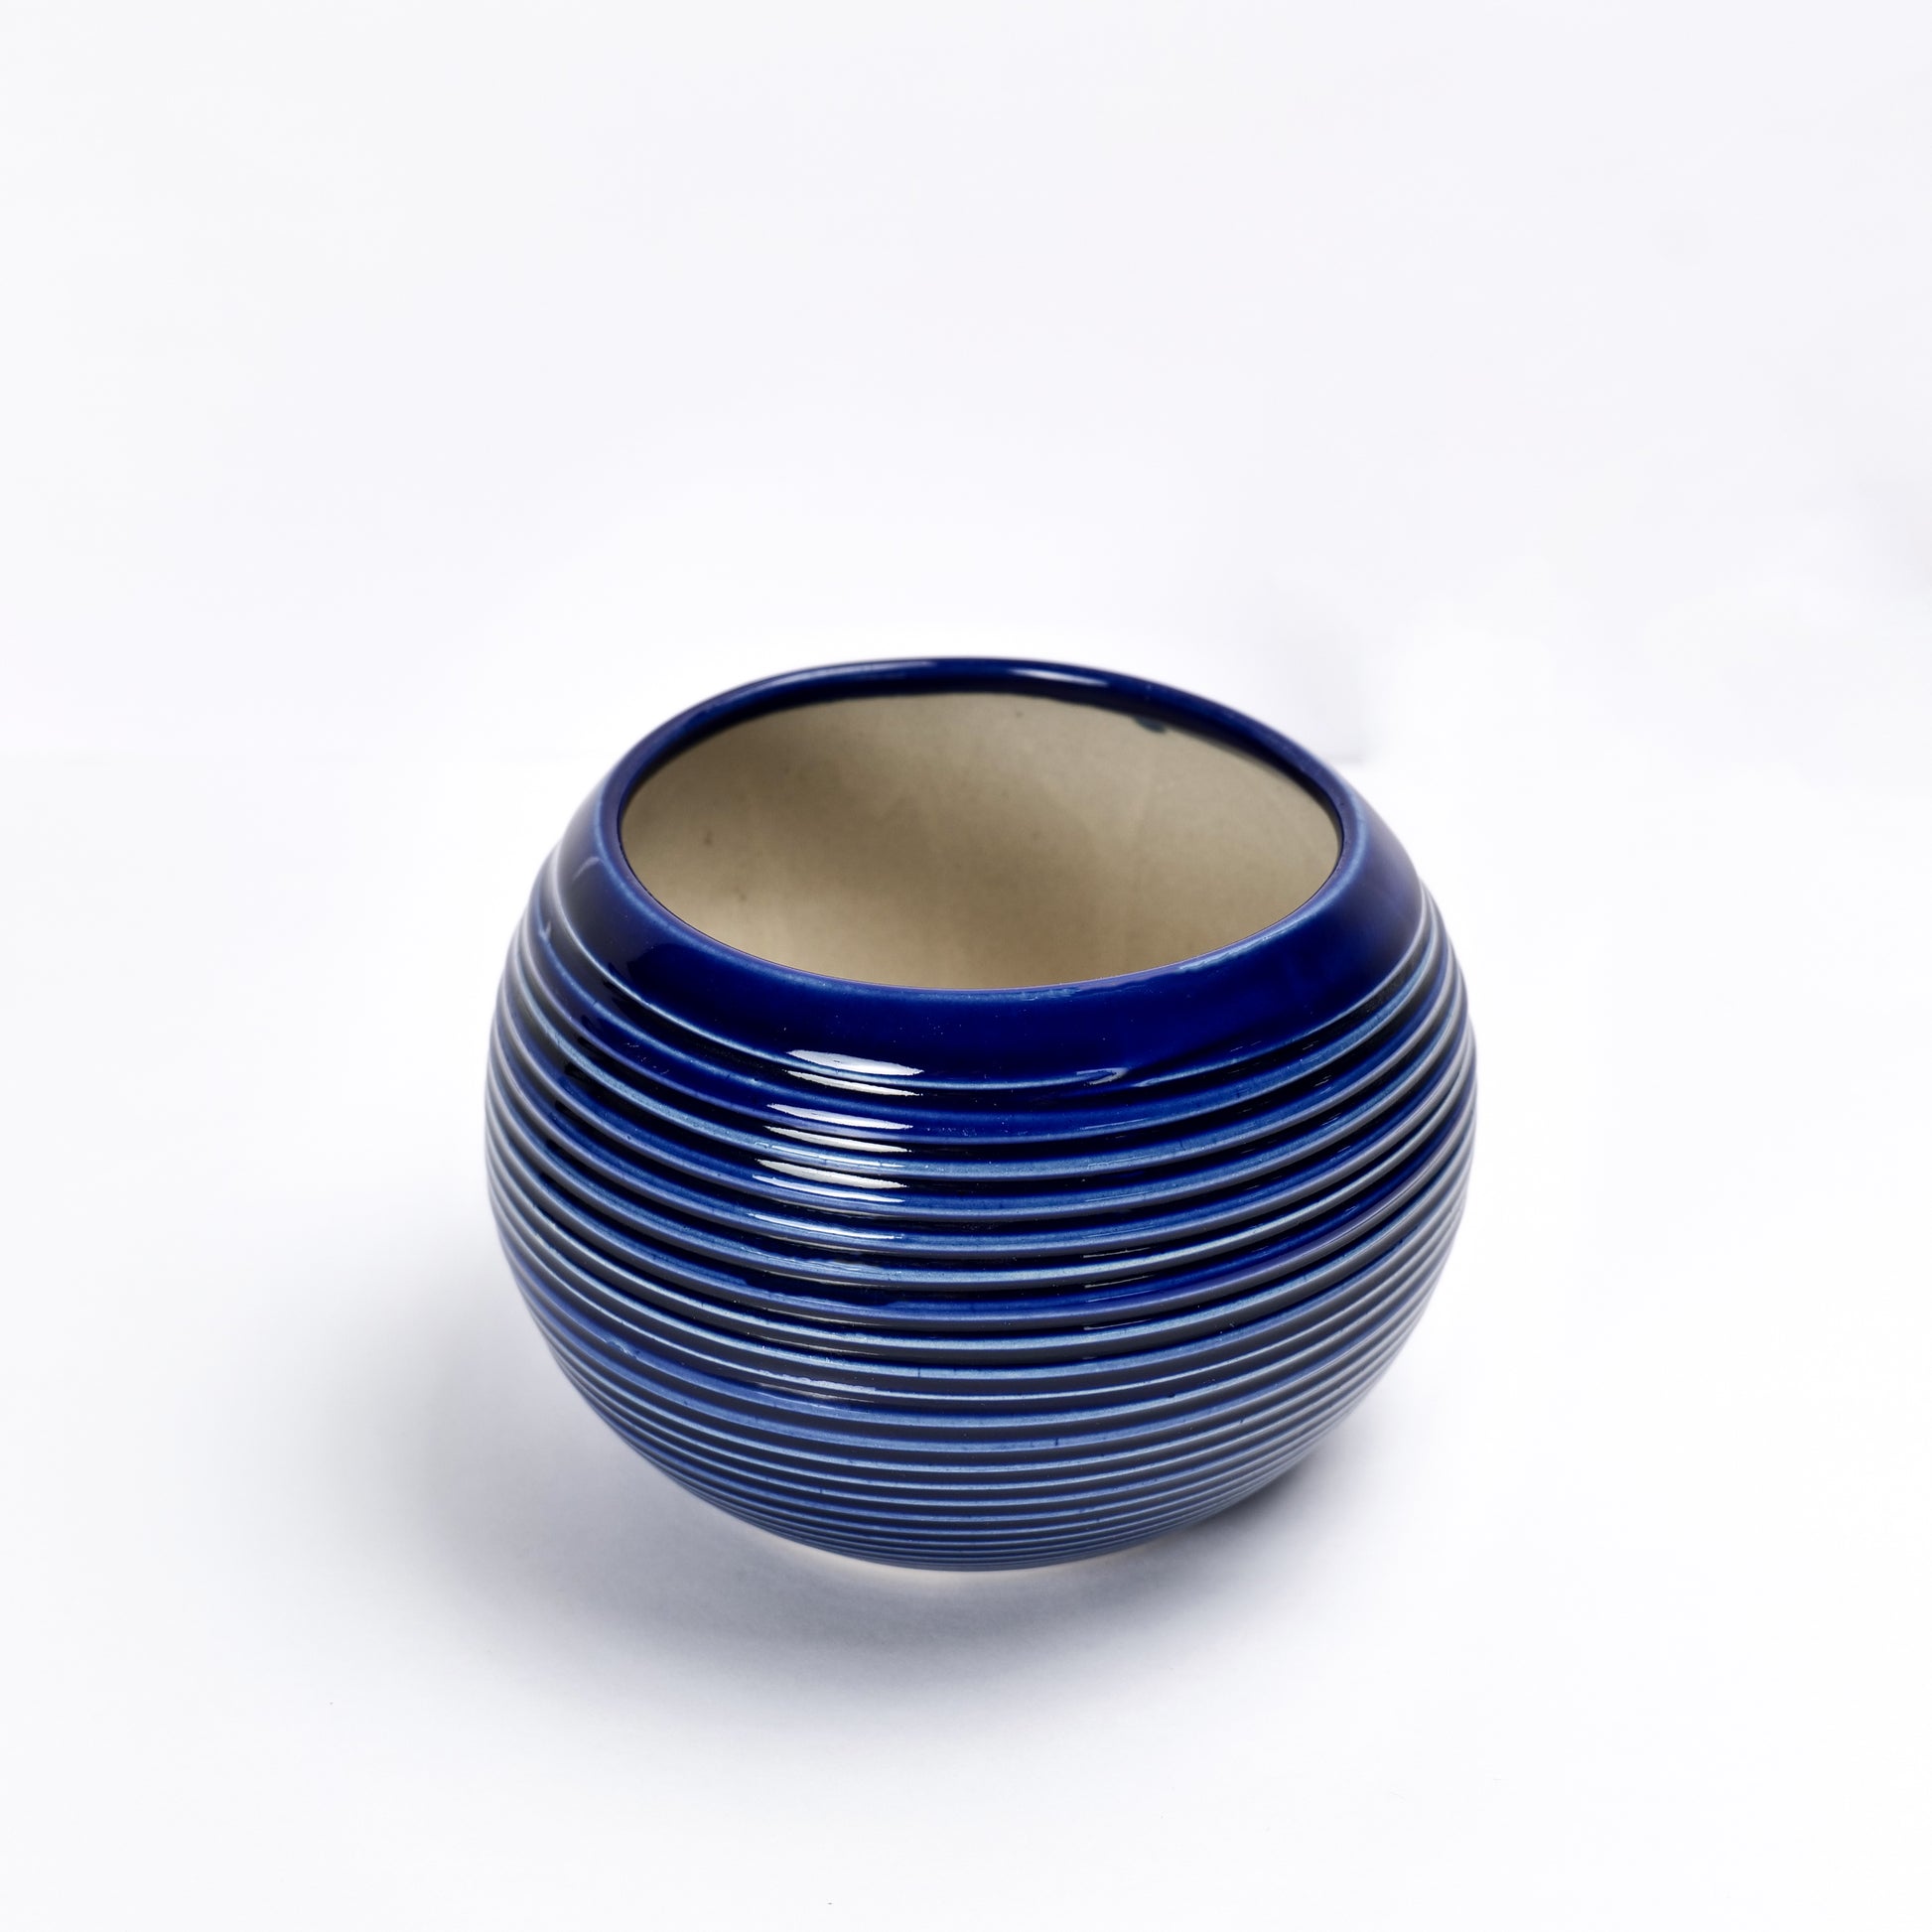 'Indigo Ridged' Ceramic Studio Pottery Planter Pot - artystagallery